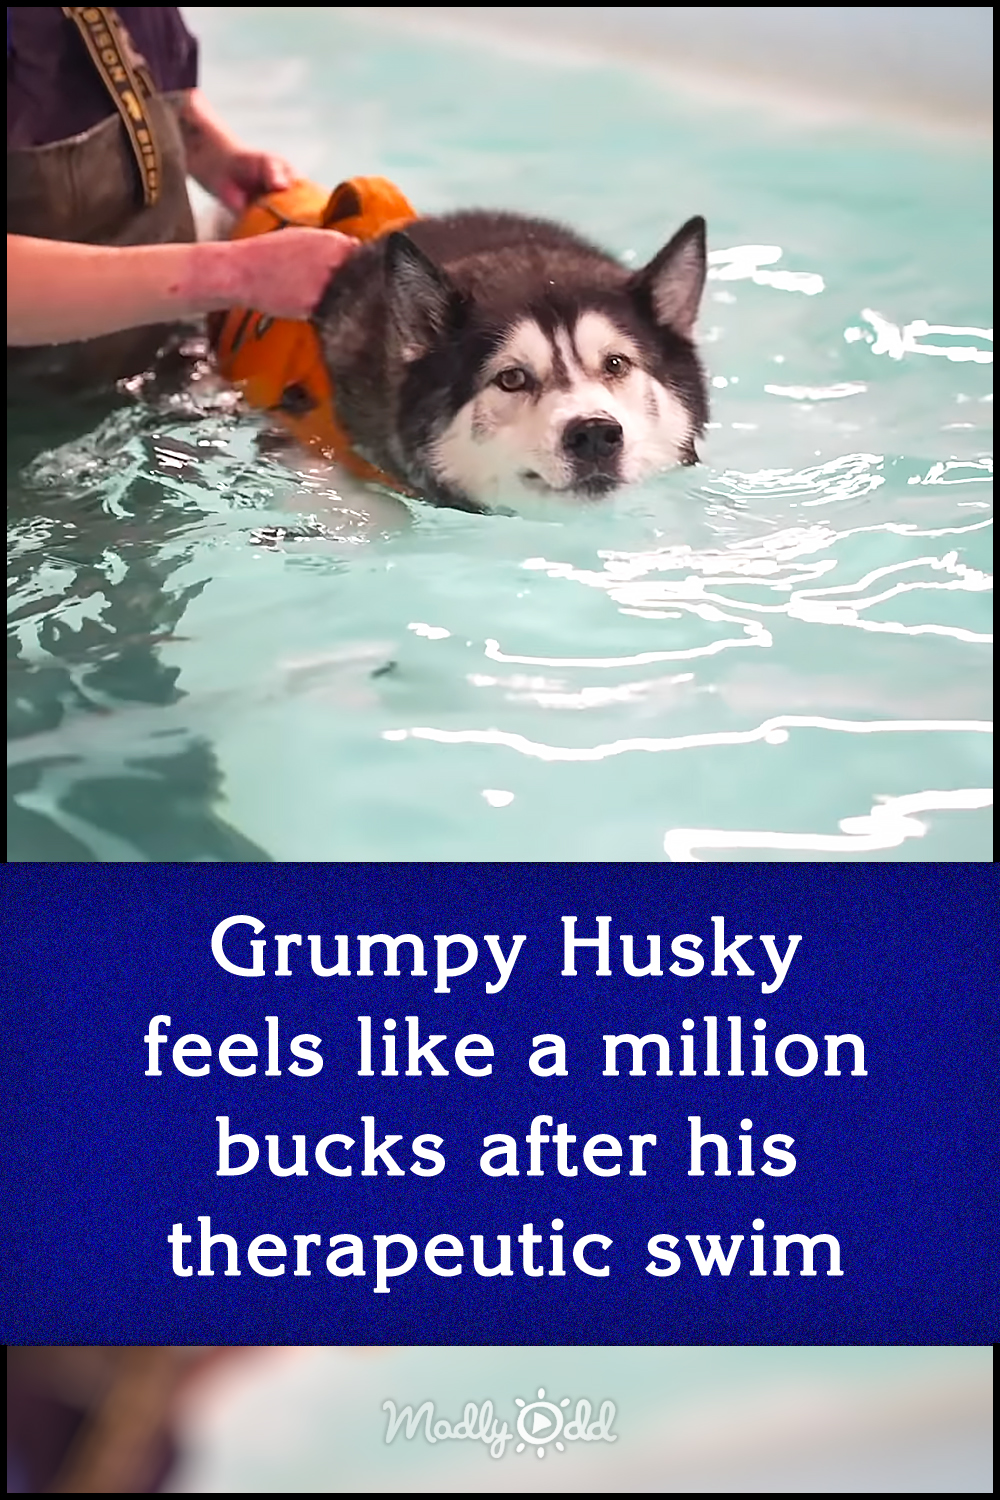 Grumpy Husky feels like a million bucks after his therapeutic swim